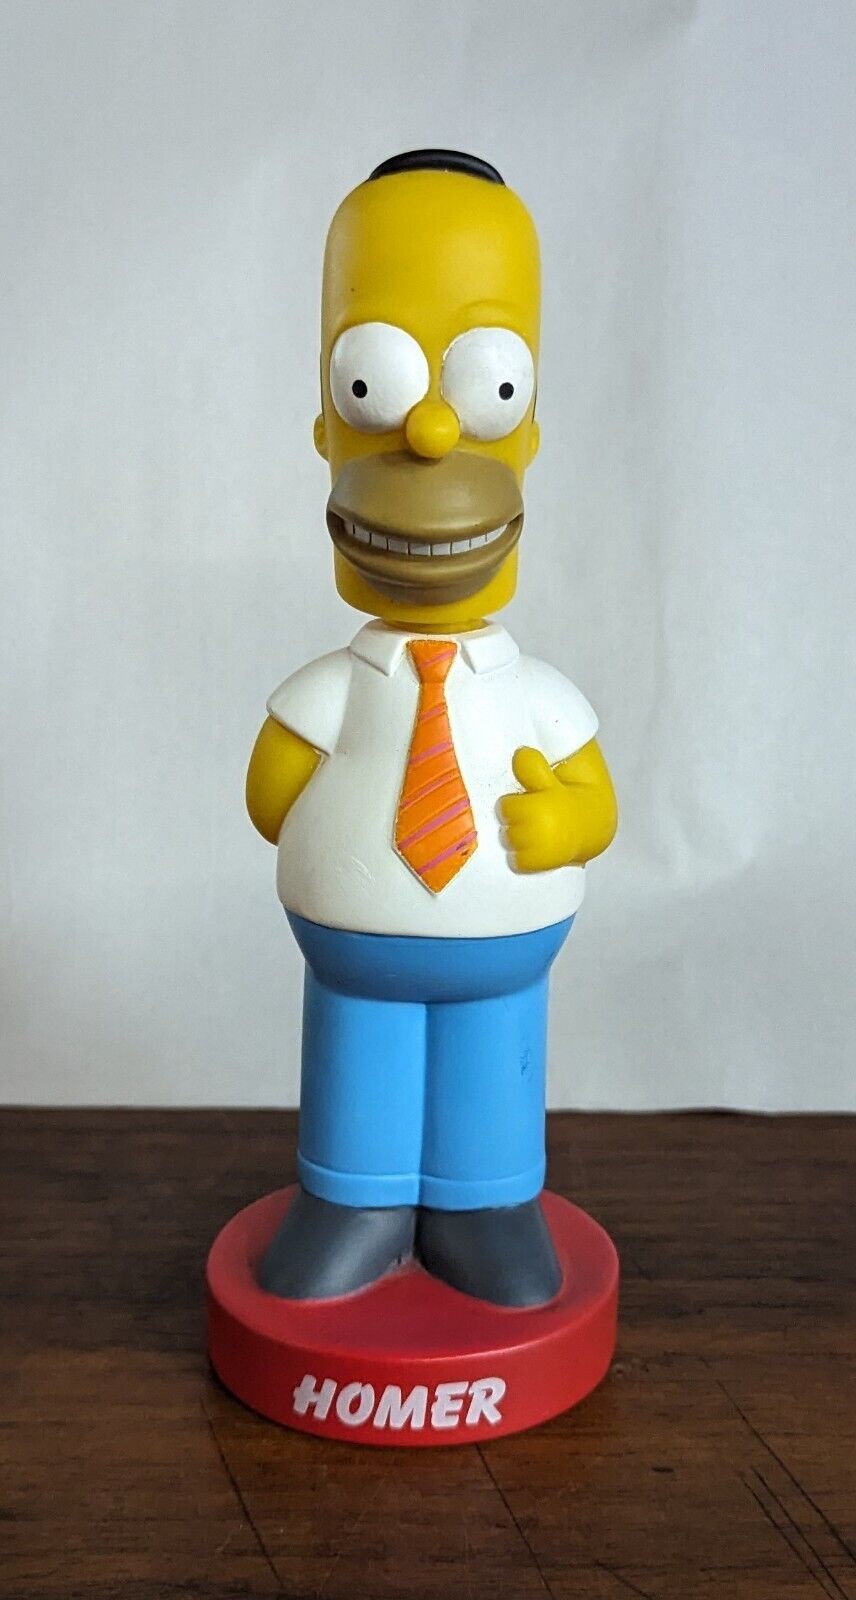 2005 Funko The Simpsons Homer Simpson Wacky Wobbler Bobblehead Figure